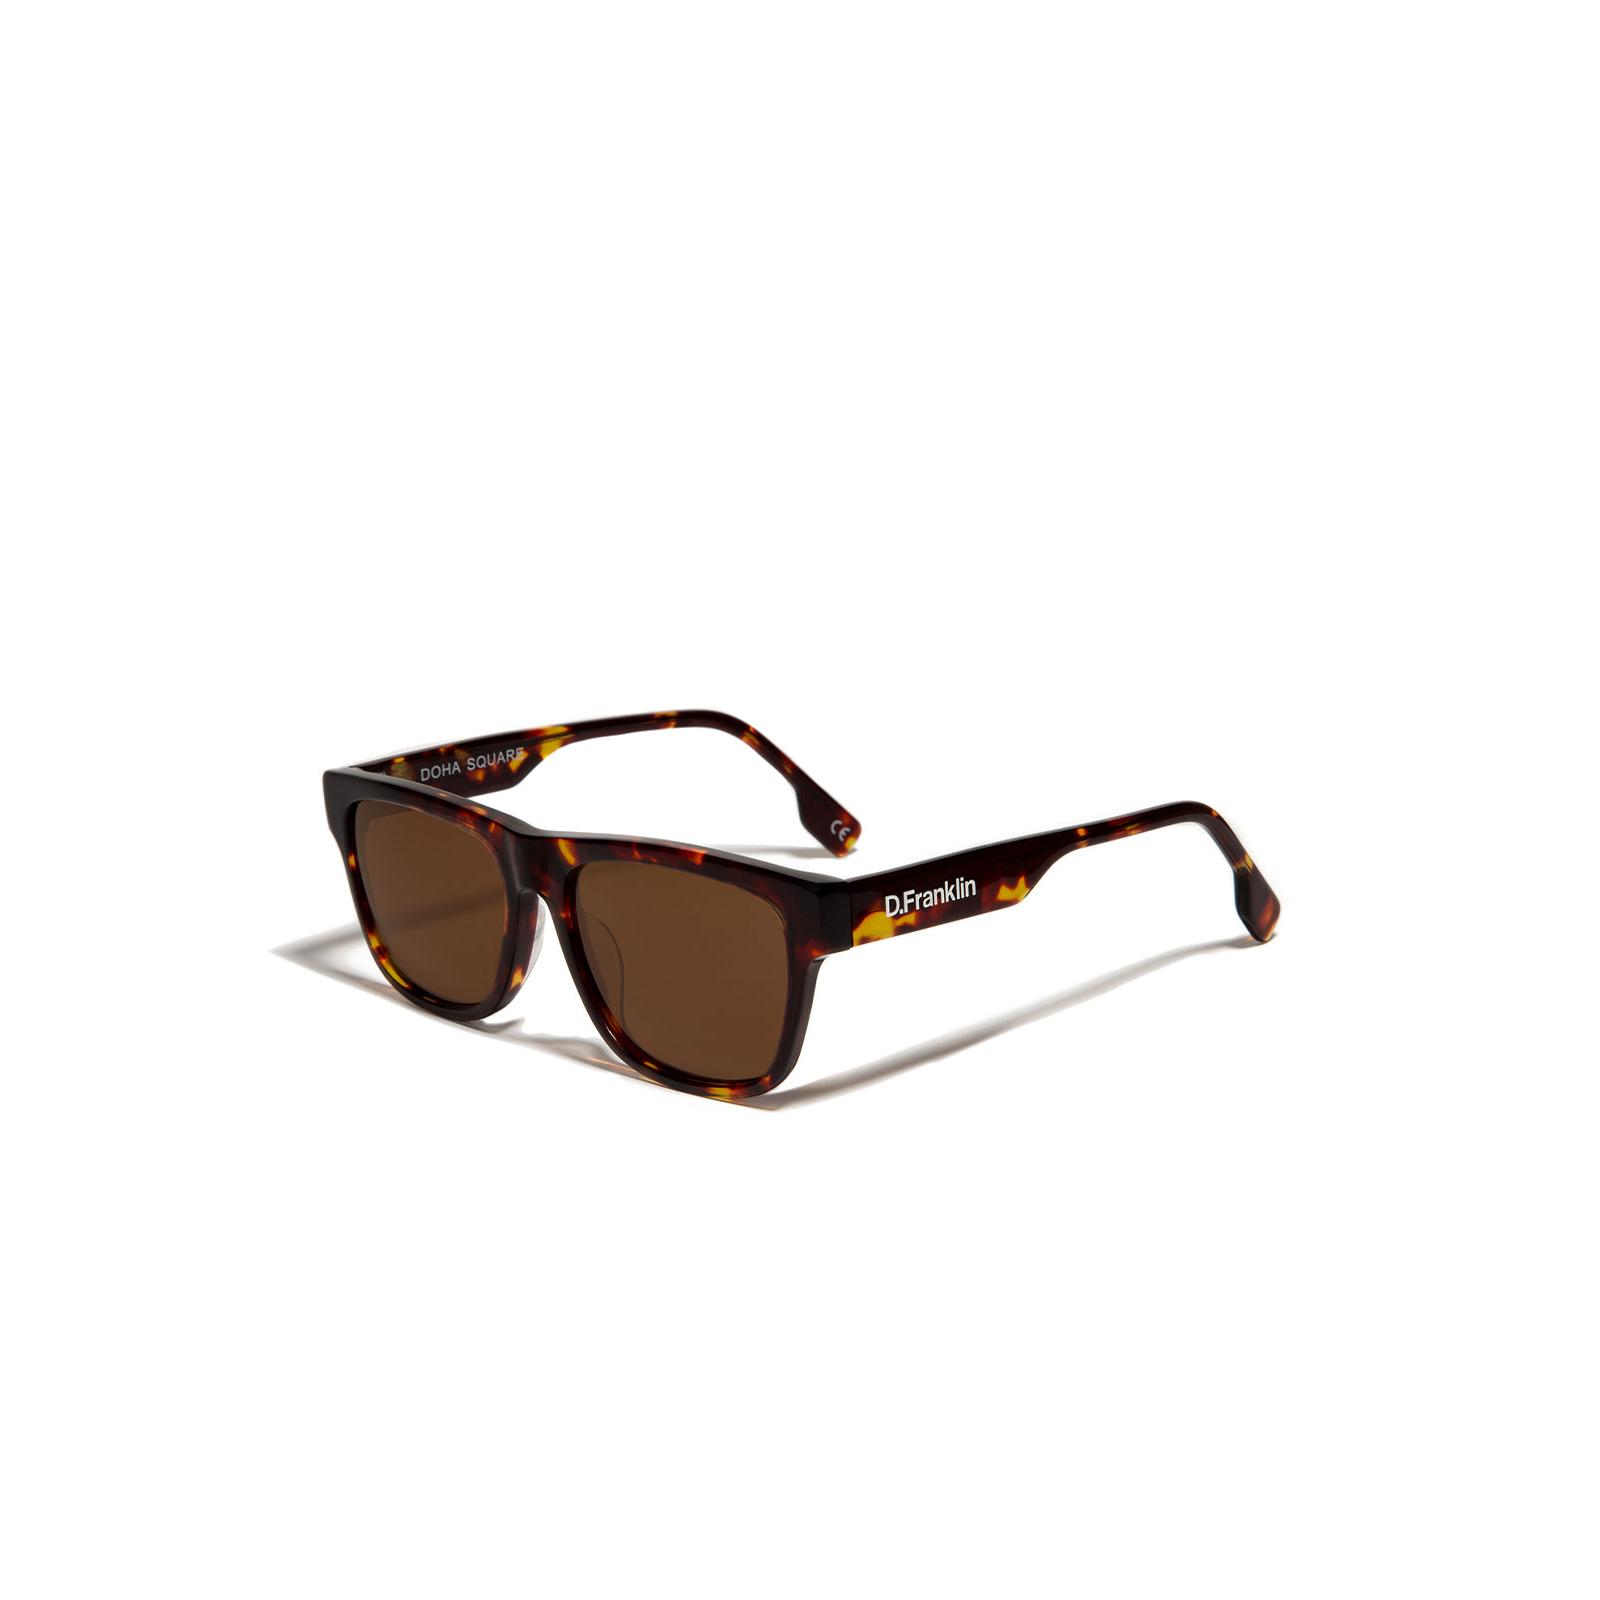 D FRANKLIN D.Franklin ORION II C.0 - Sunglasses - carey/g15